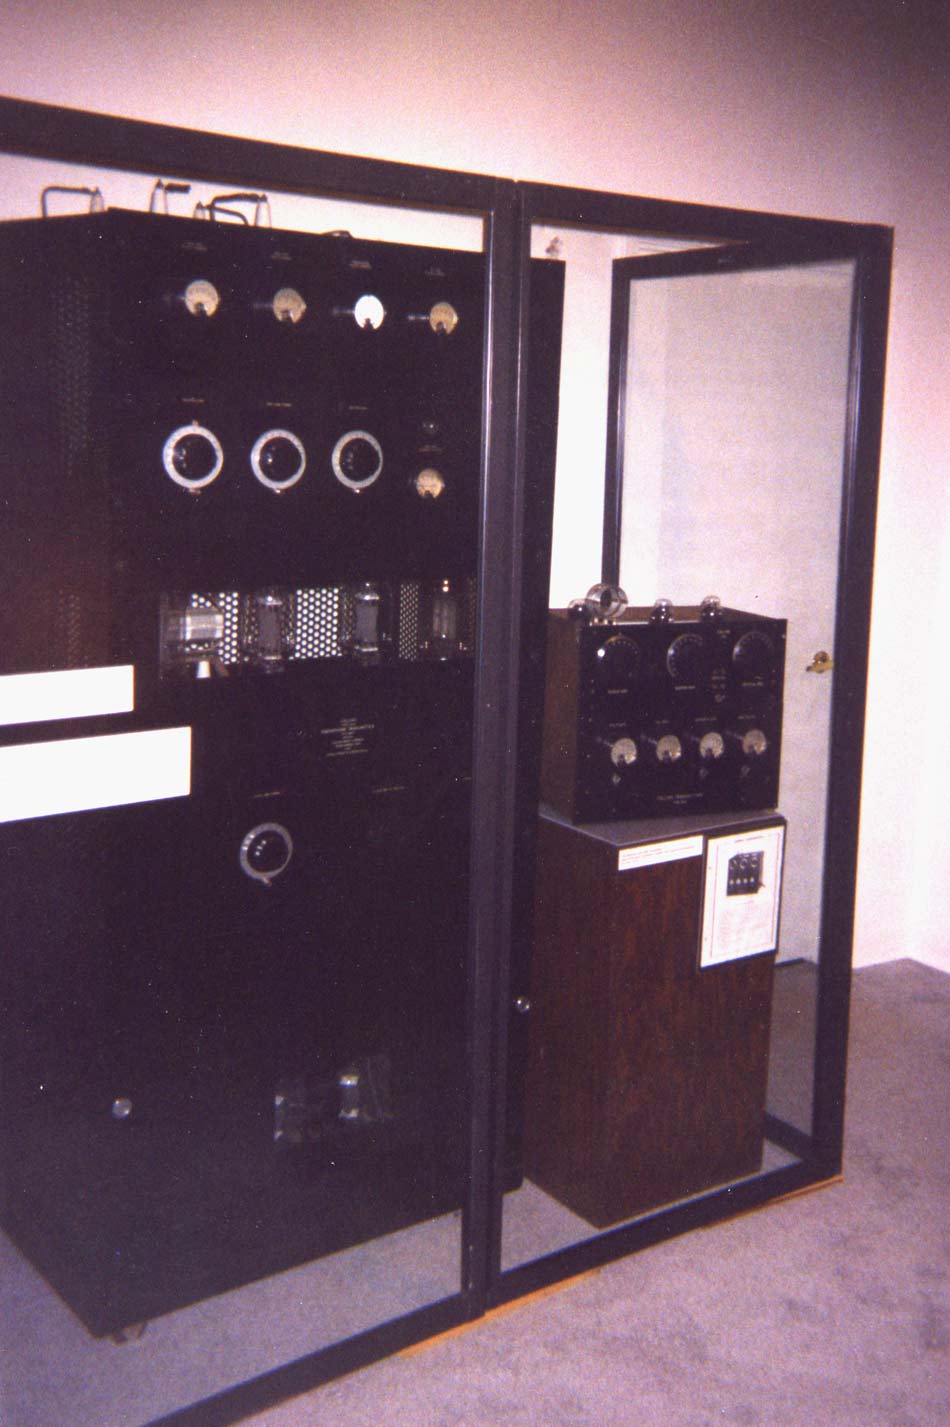 Old Collins radio transmitters on display